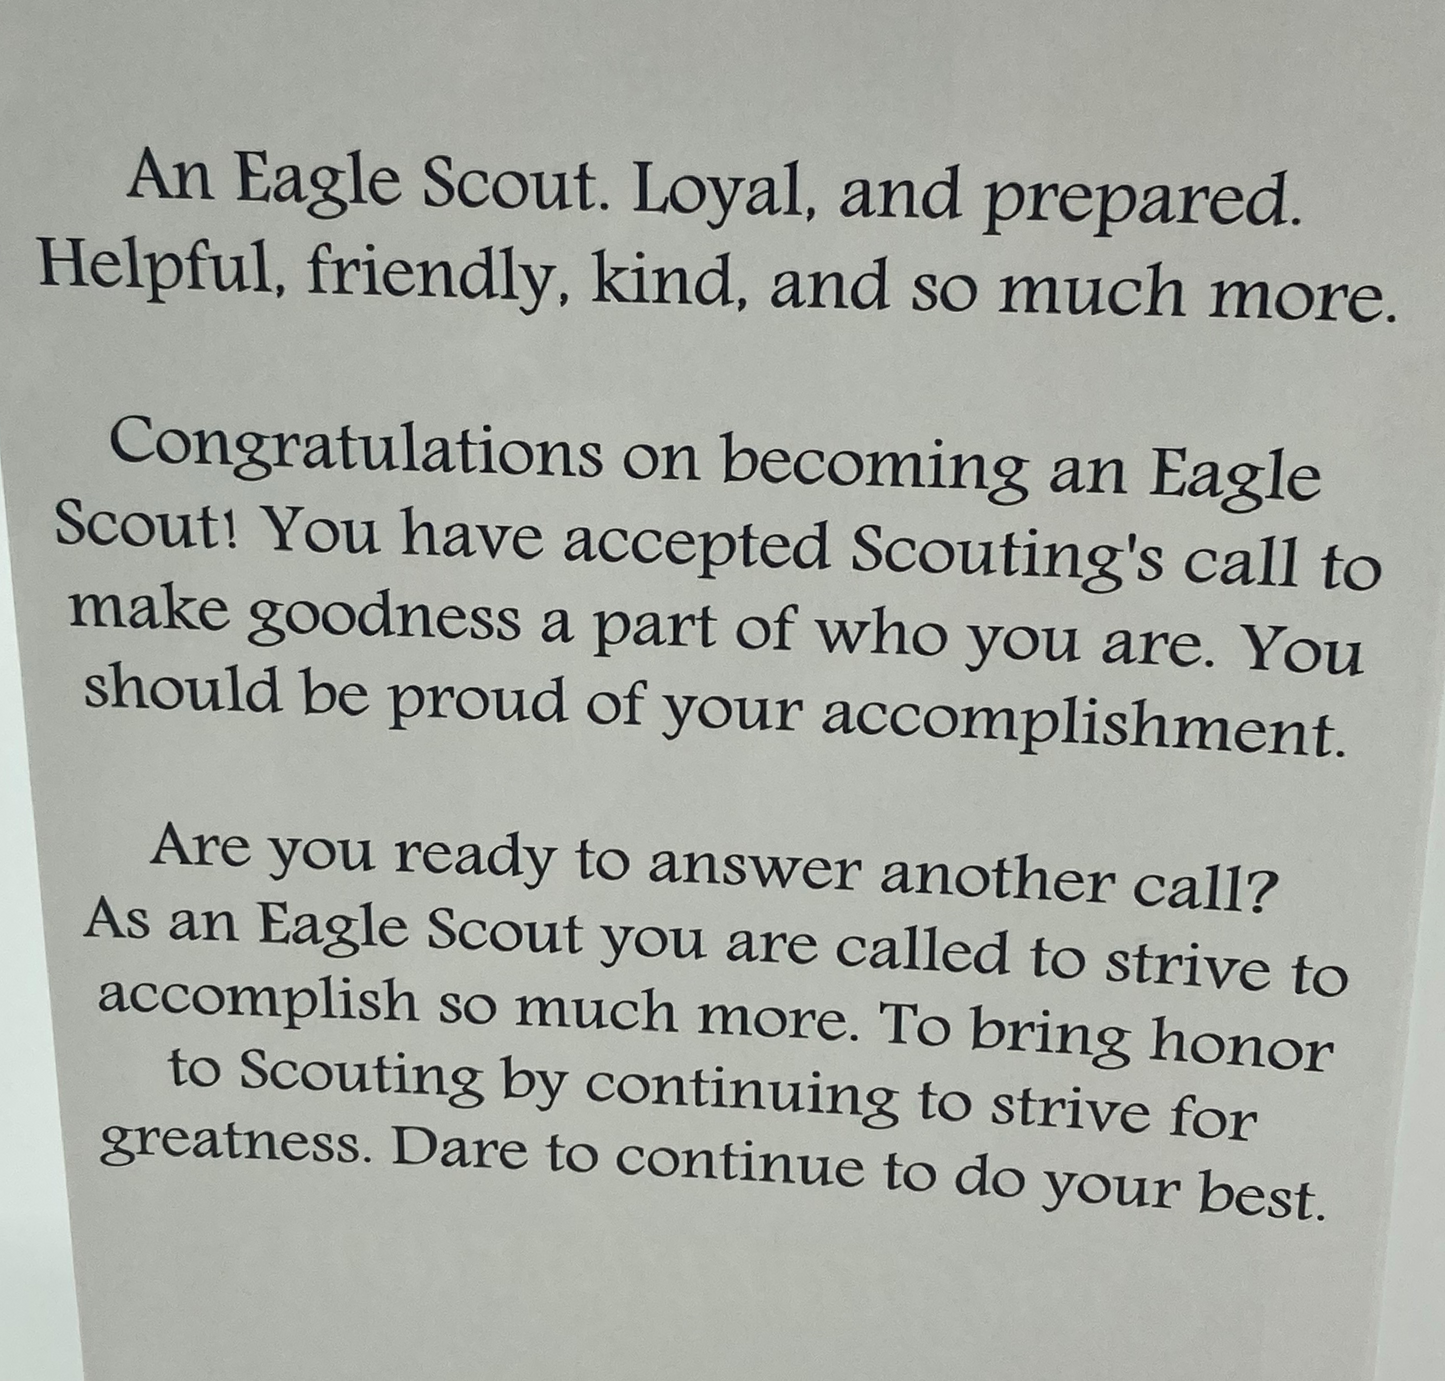 Card Eagle Congrats with Flag